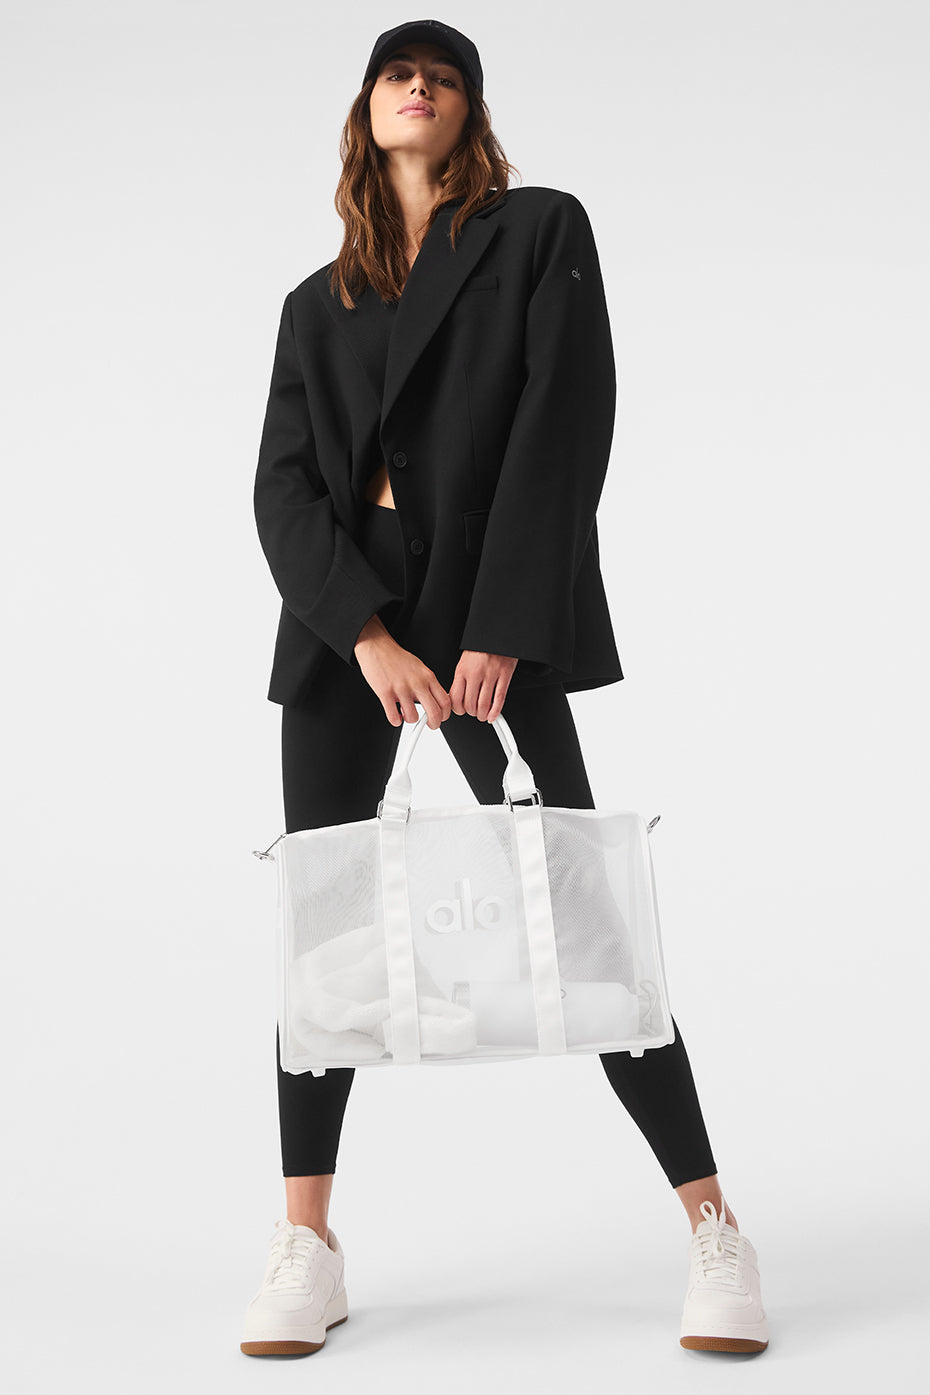 Shop ALO Yoga Unisex Blended Fabrics Street Style Activewear Bags by  mything